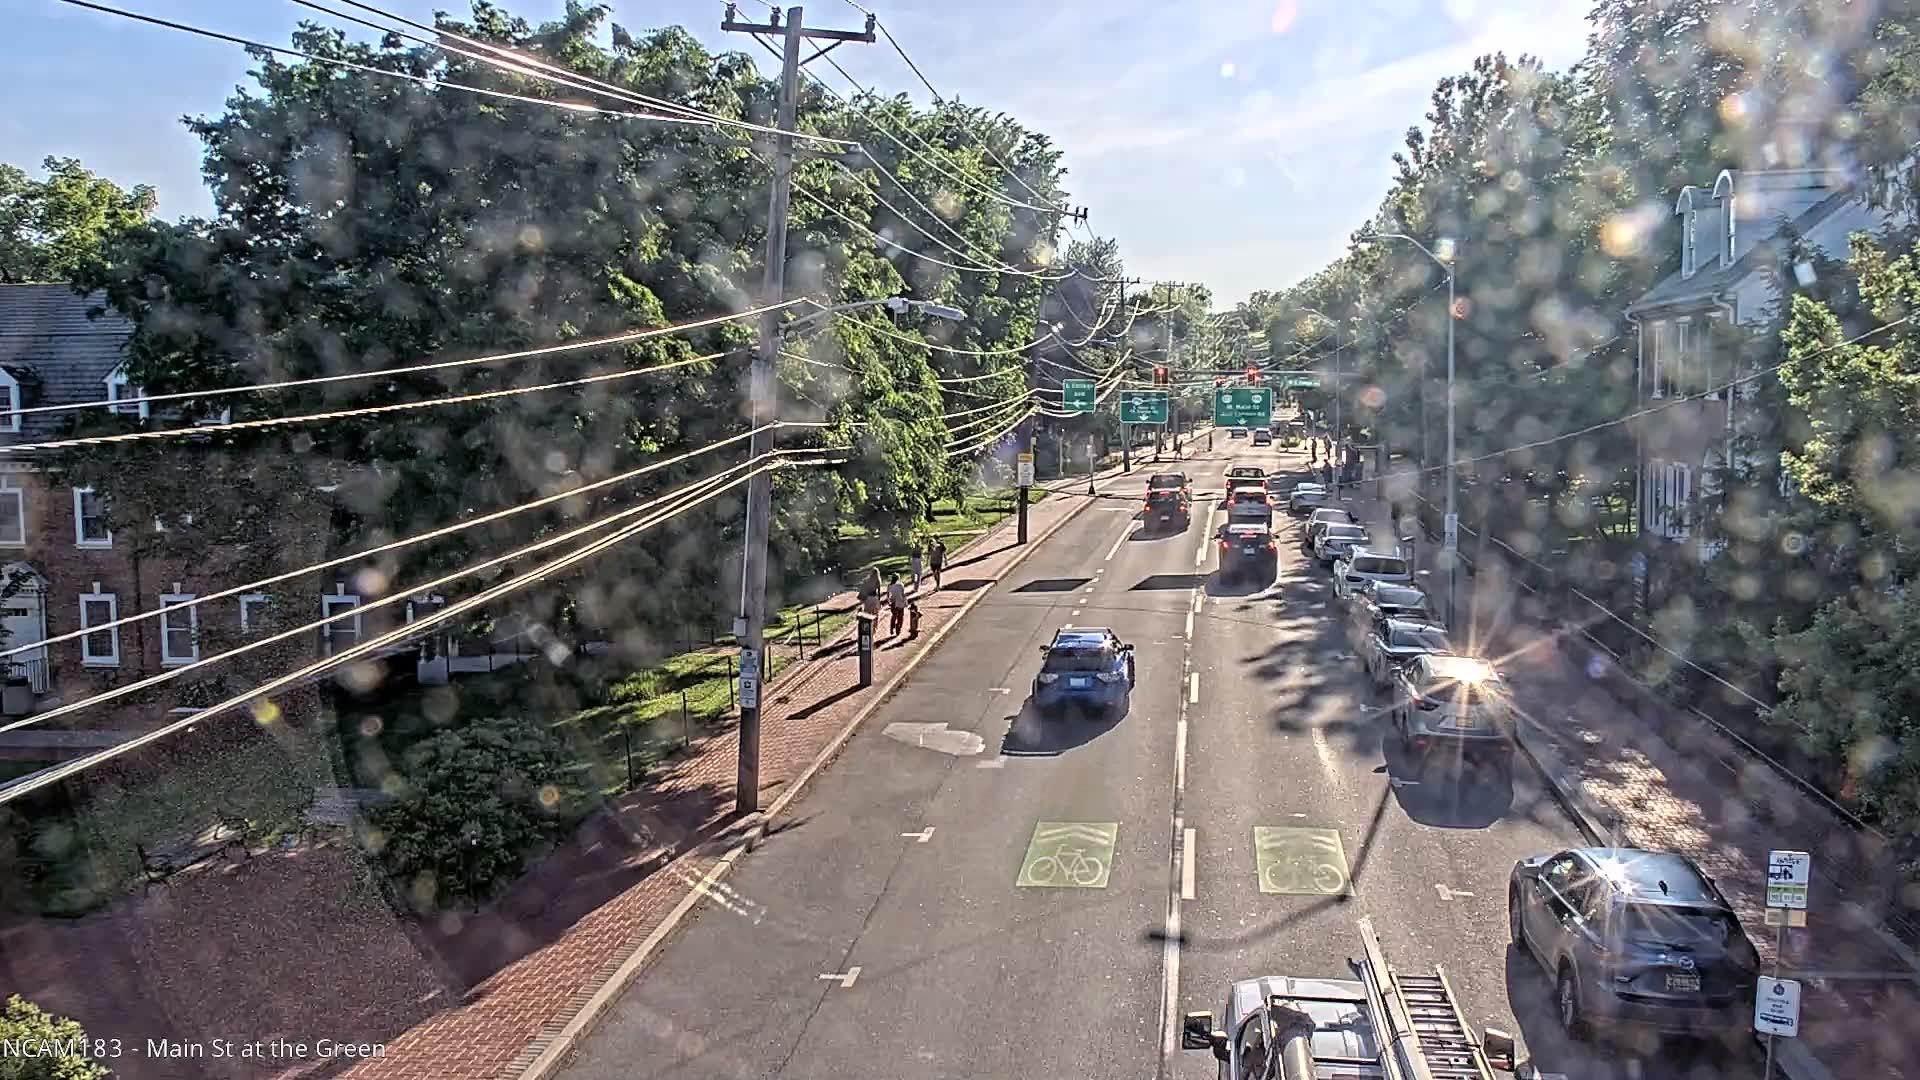 Newark: E MAIN ST (SR 273) @ THE GREEN Traffic Camera